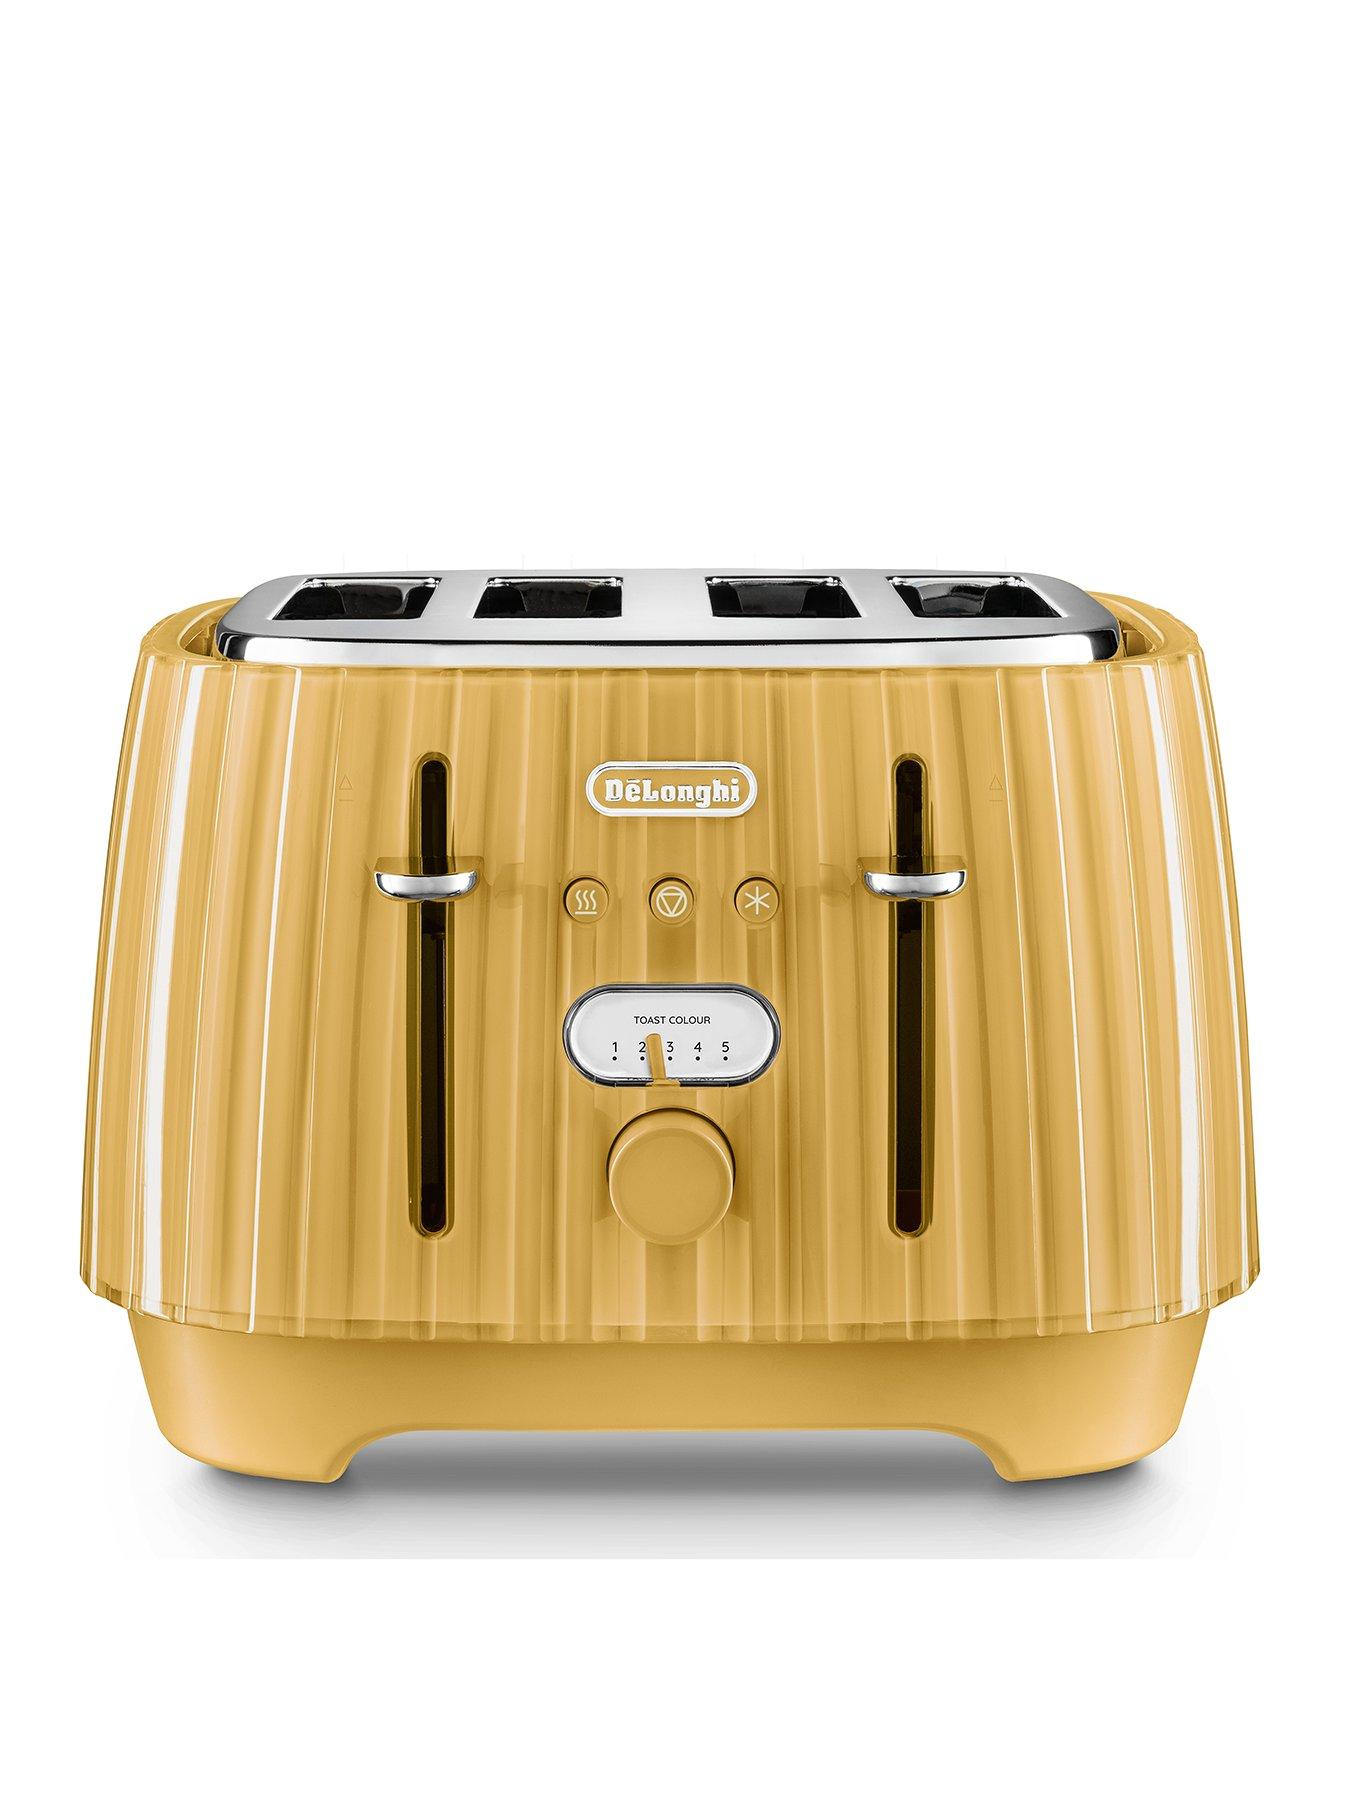 https://media.very.ie/i/littlewoodsireland/V94GY_SQ1_0000000088_NO_COLOR_SLf/delonghi-delonghi-ballerina-4-slice-toaster-yellow.jpg?$180x240_retinamobilex2$&$roundel_lwireland$&p1_img=vsp_pink&p3_img=video_roundel